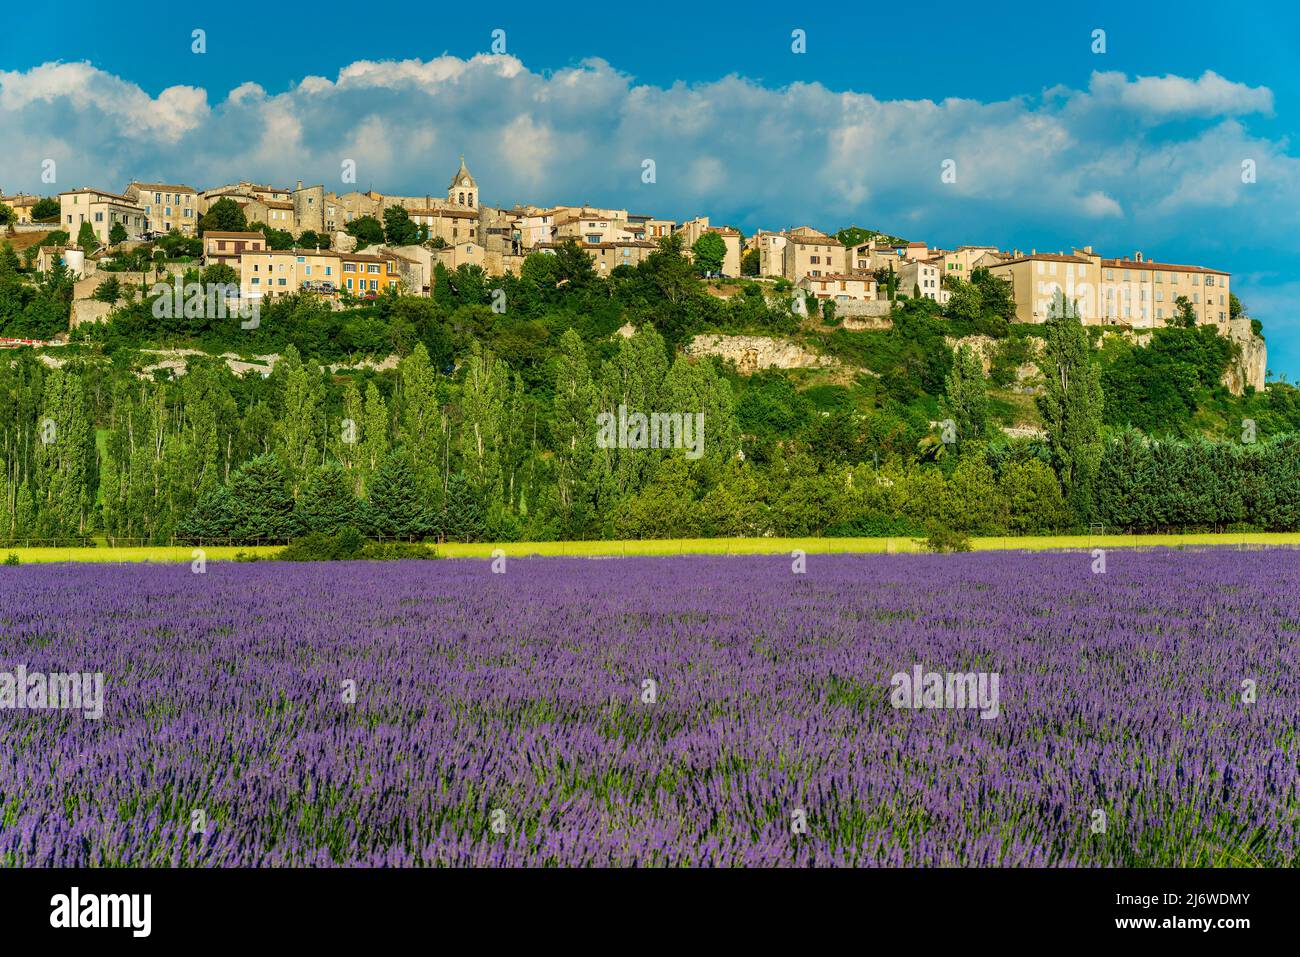 Lavander field in bloom, Saignon, Provence, France Stock Photo